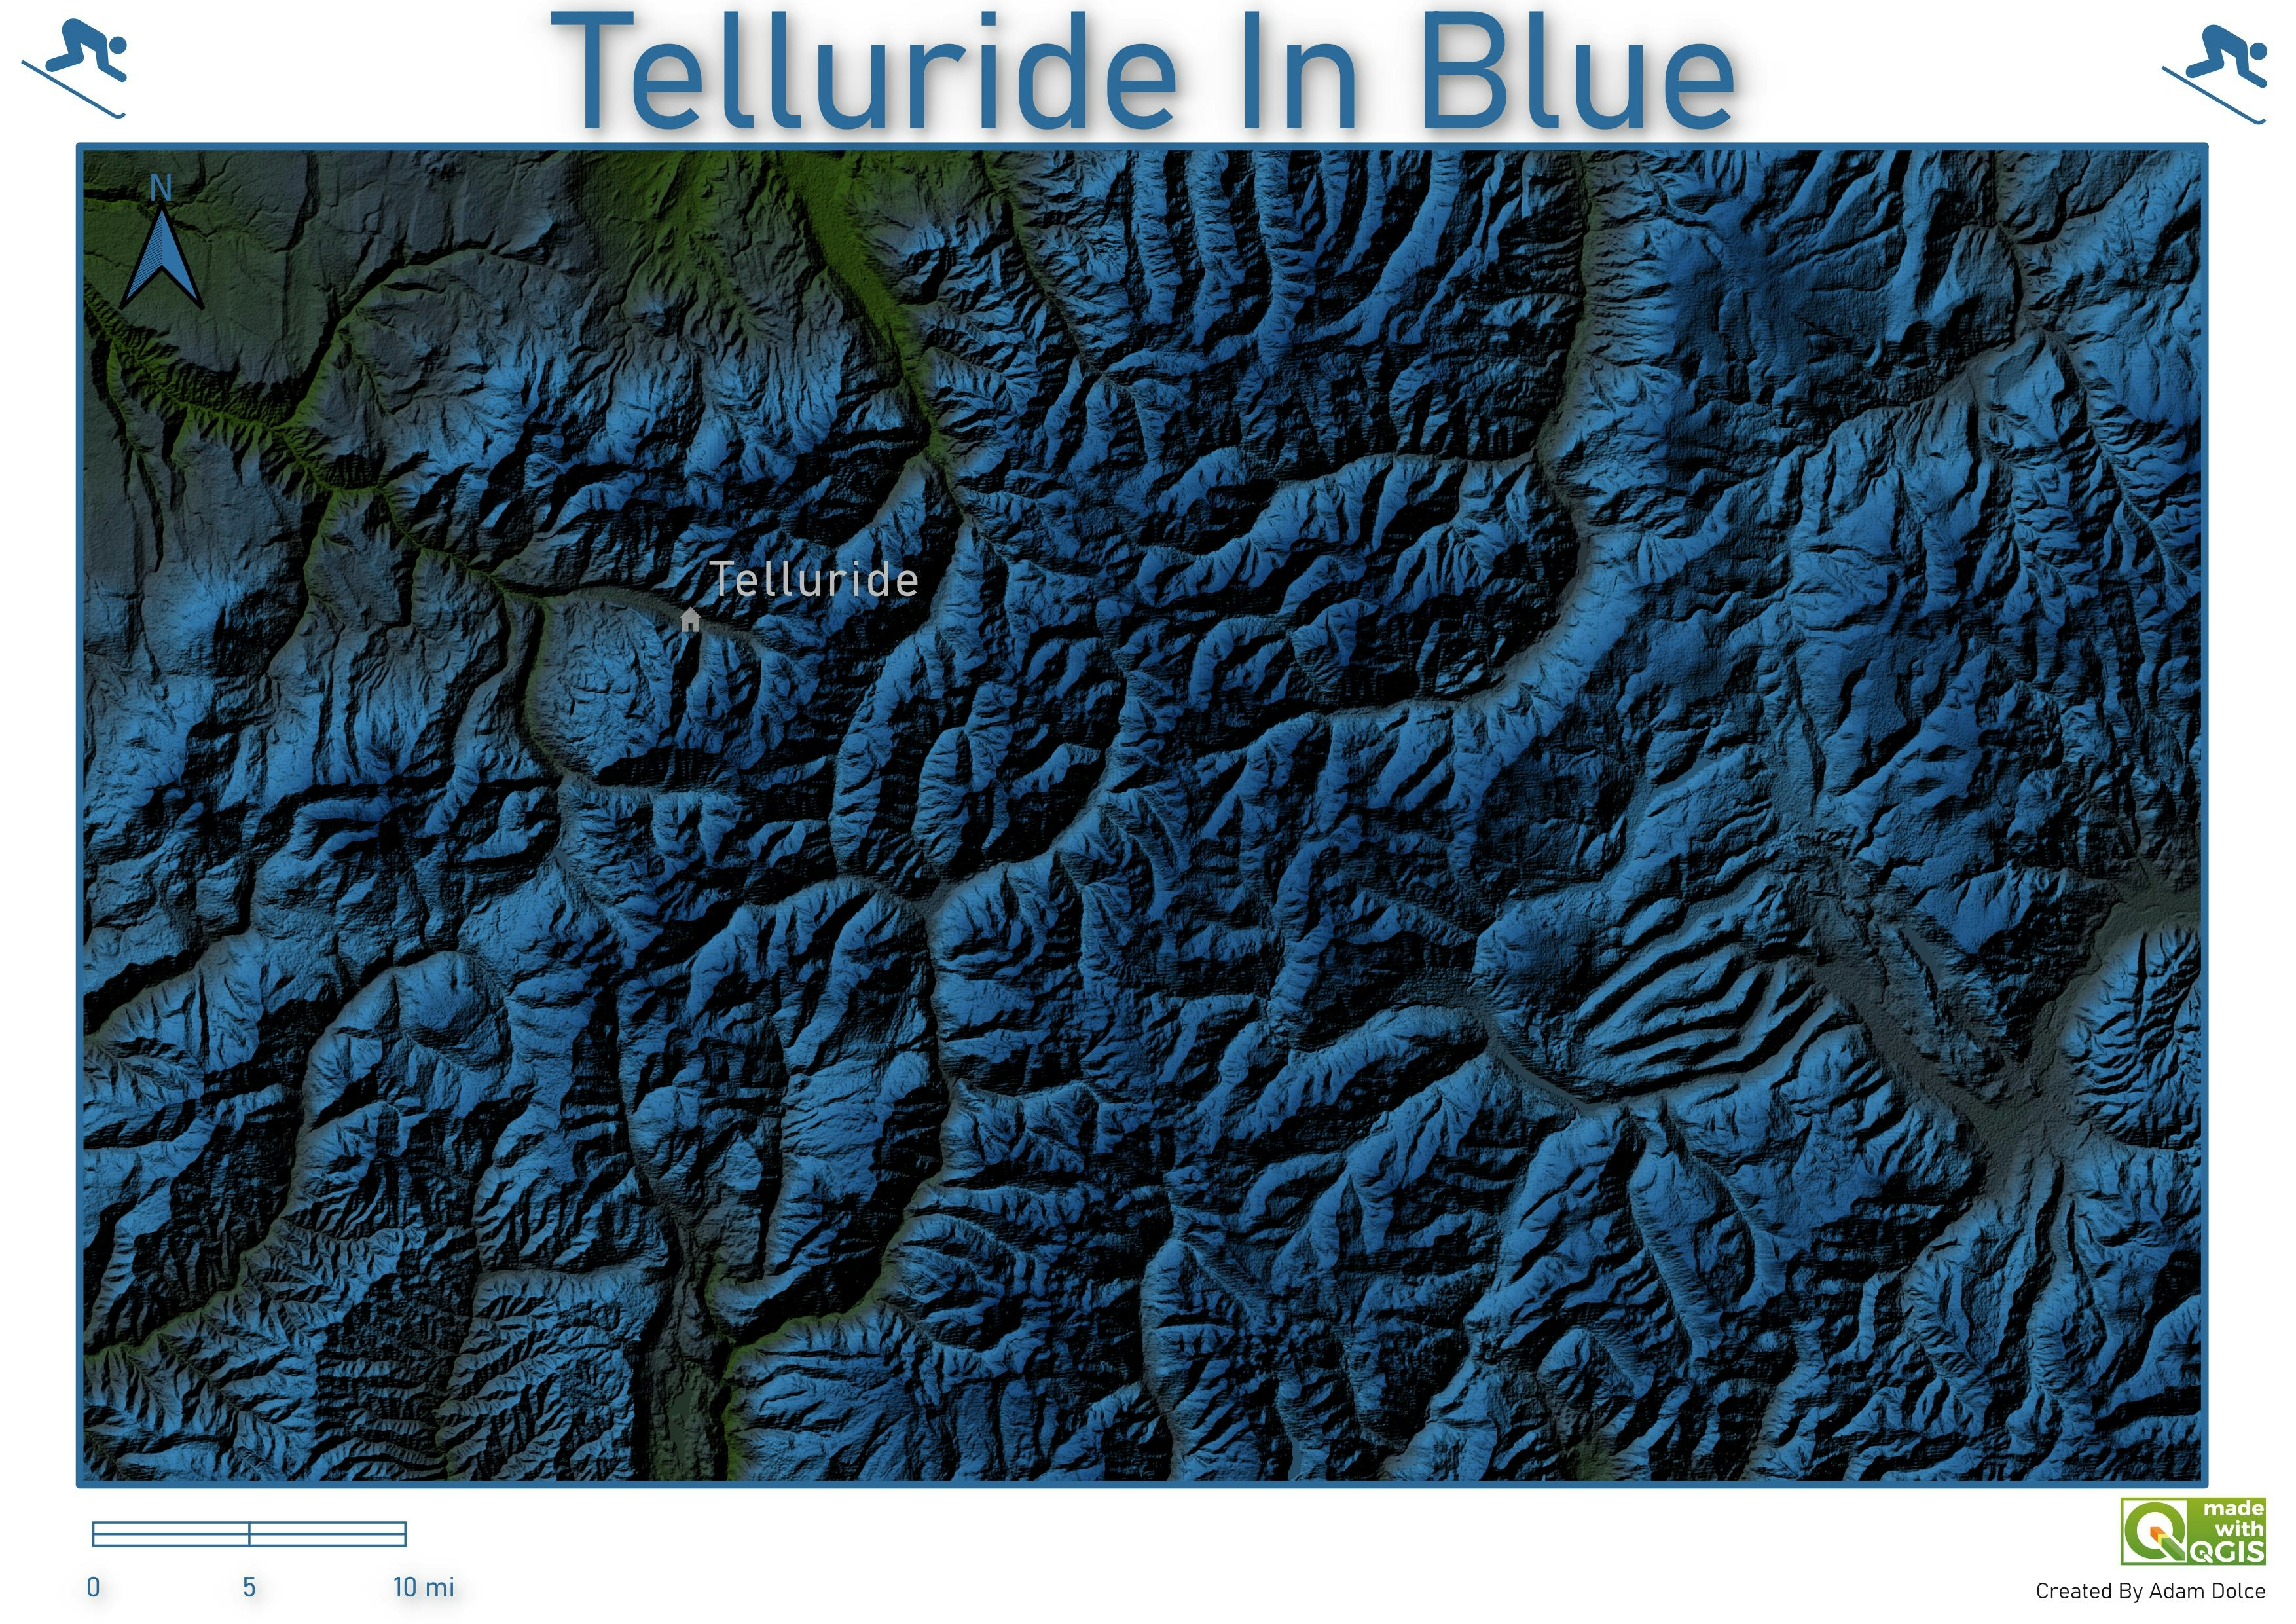 Telluride in Blue